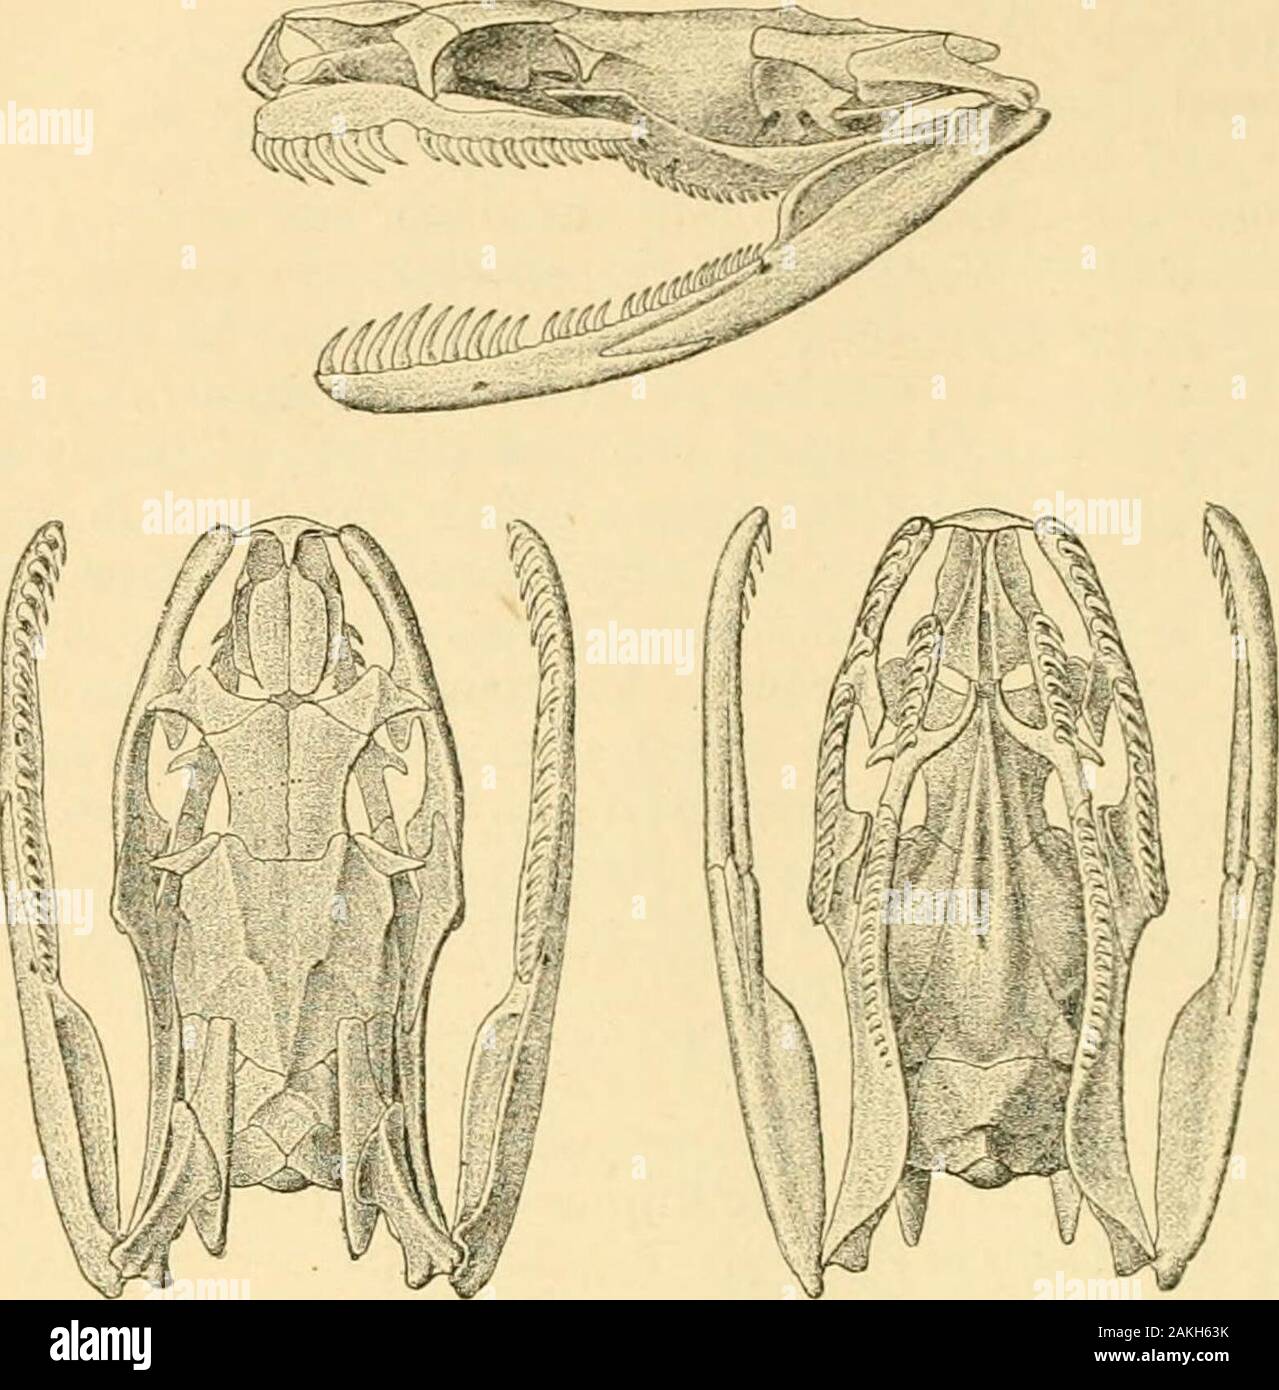 Catalogo dei serpenti nel British Museum di Storia Naturale) .. . Serp. ii. p. 104 (1837).Boiiedon, Dum. (^ Bibr. Mem. Ac. Sc. XXIII. 1853, p. 400, e ERP. Gen. vii. p. 357 (1854); Jmi, Elenco sist. OJid. p. 95 (1863).Alopecion, Dum. Sf Bibr. II. cc. pp. 462, 416.Eugiiathus, Dum. Sf Bibr. Erp. Gen. vii. p. 404.Holuropholis, A. Dum. Bev. et Maq. Zool. 1856, p. 465 ; Gdnth. Cat. Col. Sn. p. 200 (1858); Jan, I. c. p. 98.Boodou, Gimth. I. C. p. 198; Paters, Reise n. Mossamb. iii. p. 133 (1882), le cinque o si.x antero denti mascellari ingrandita, formando aslightly serie interrotta con il re Foto Stock